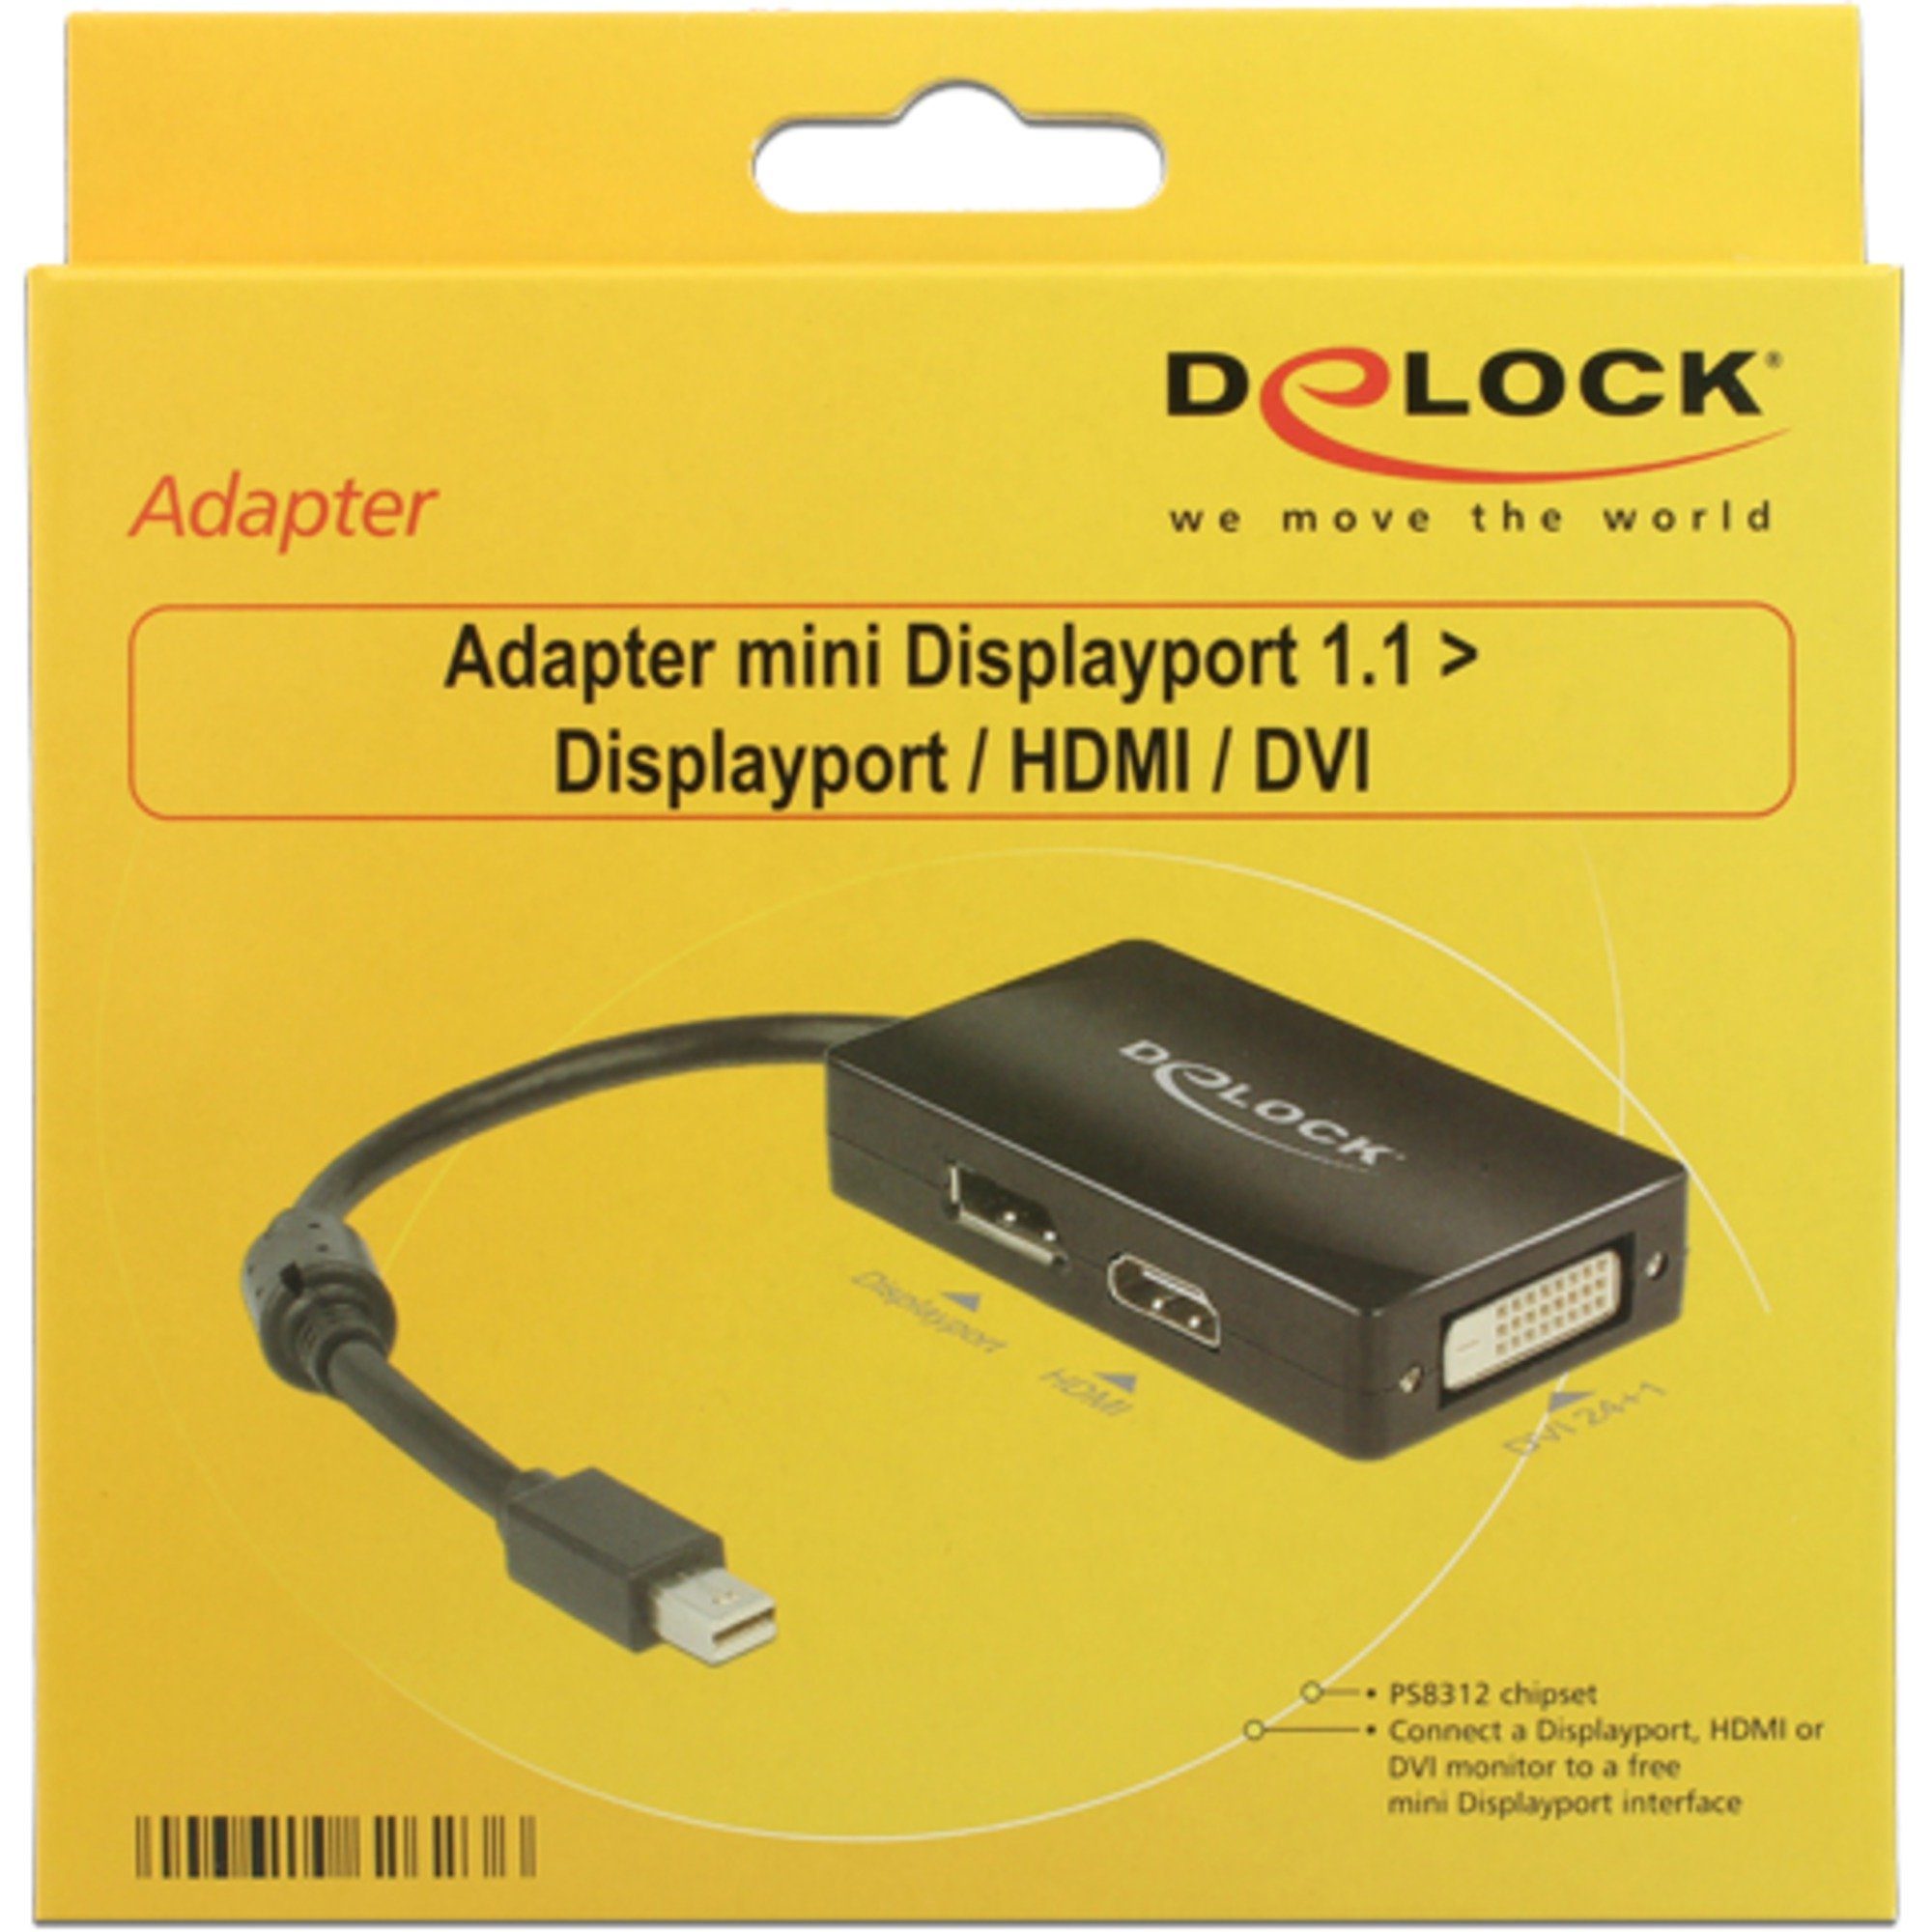 Delock DeLOCK Adapter MiniDisplayport > DisplayPort / Audio- & Video-Adapter